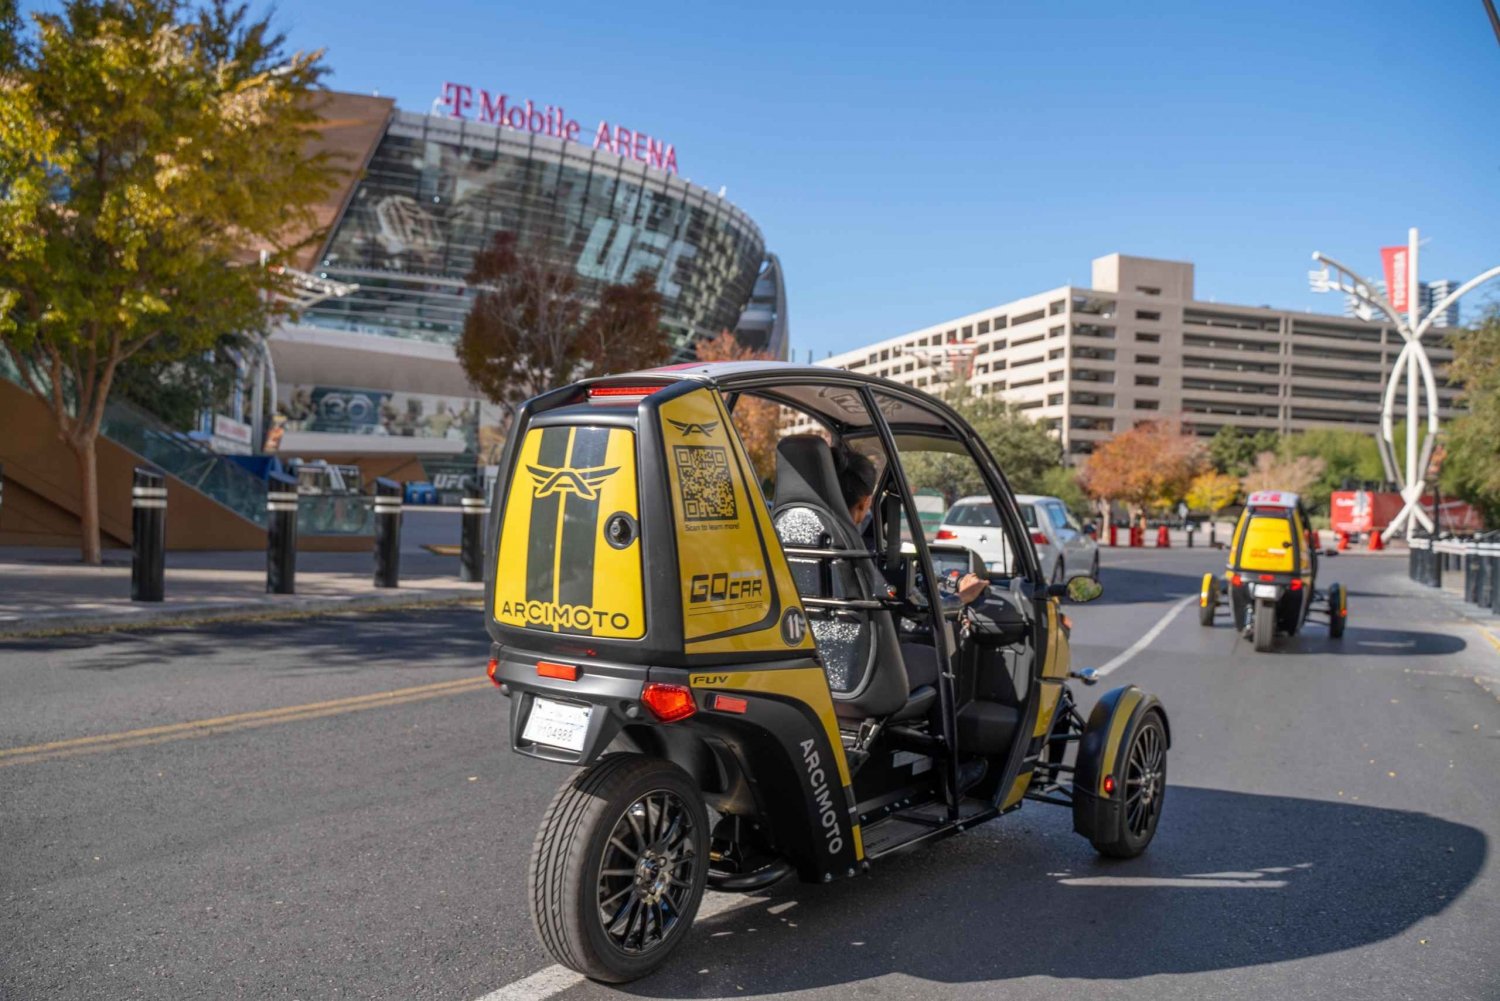 Las Vegas: City Highlights Private Talking GoCar Rental